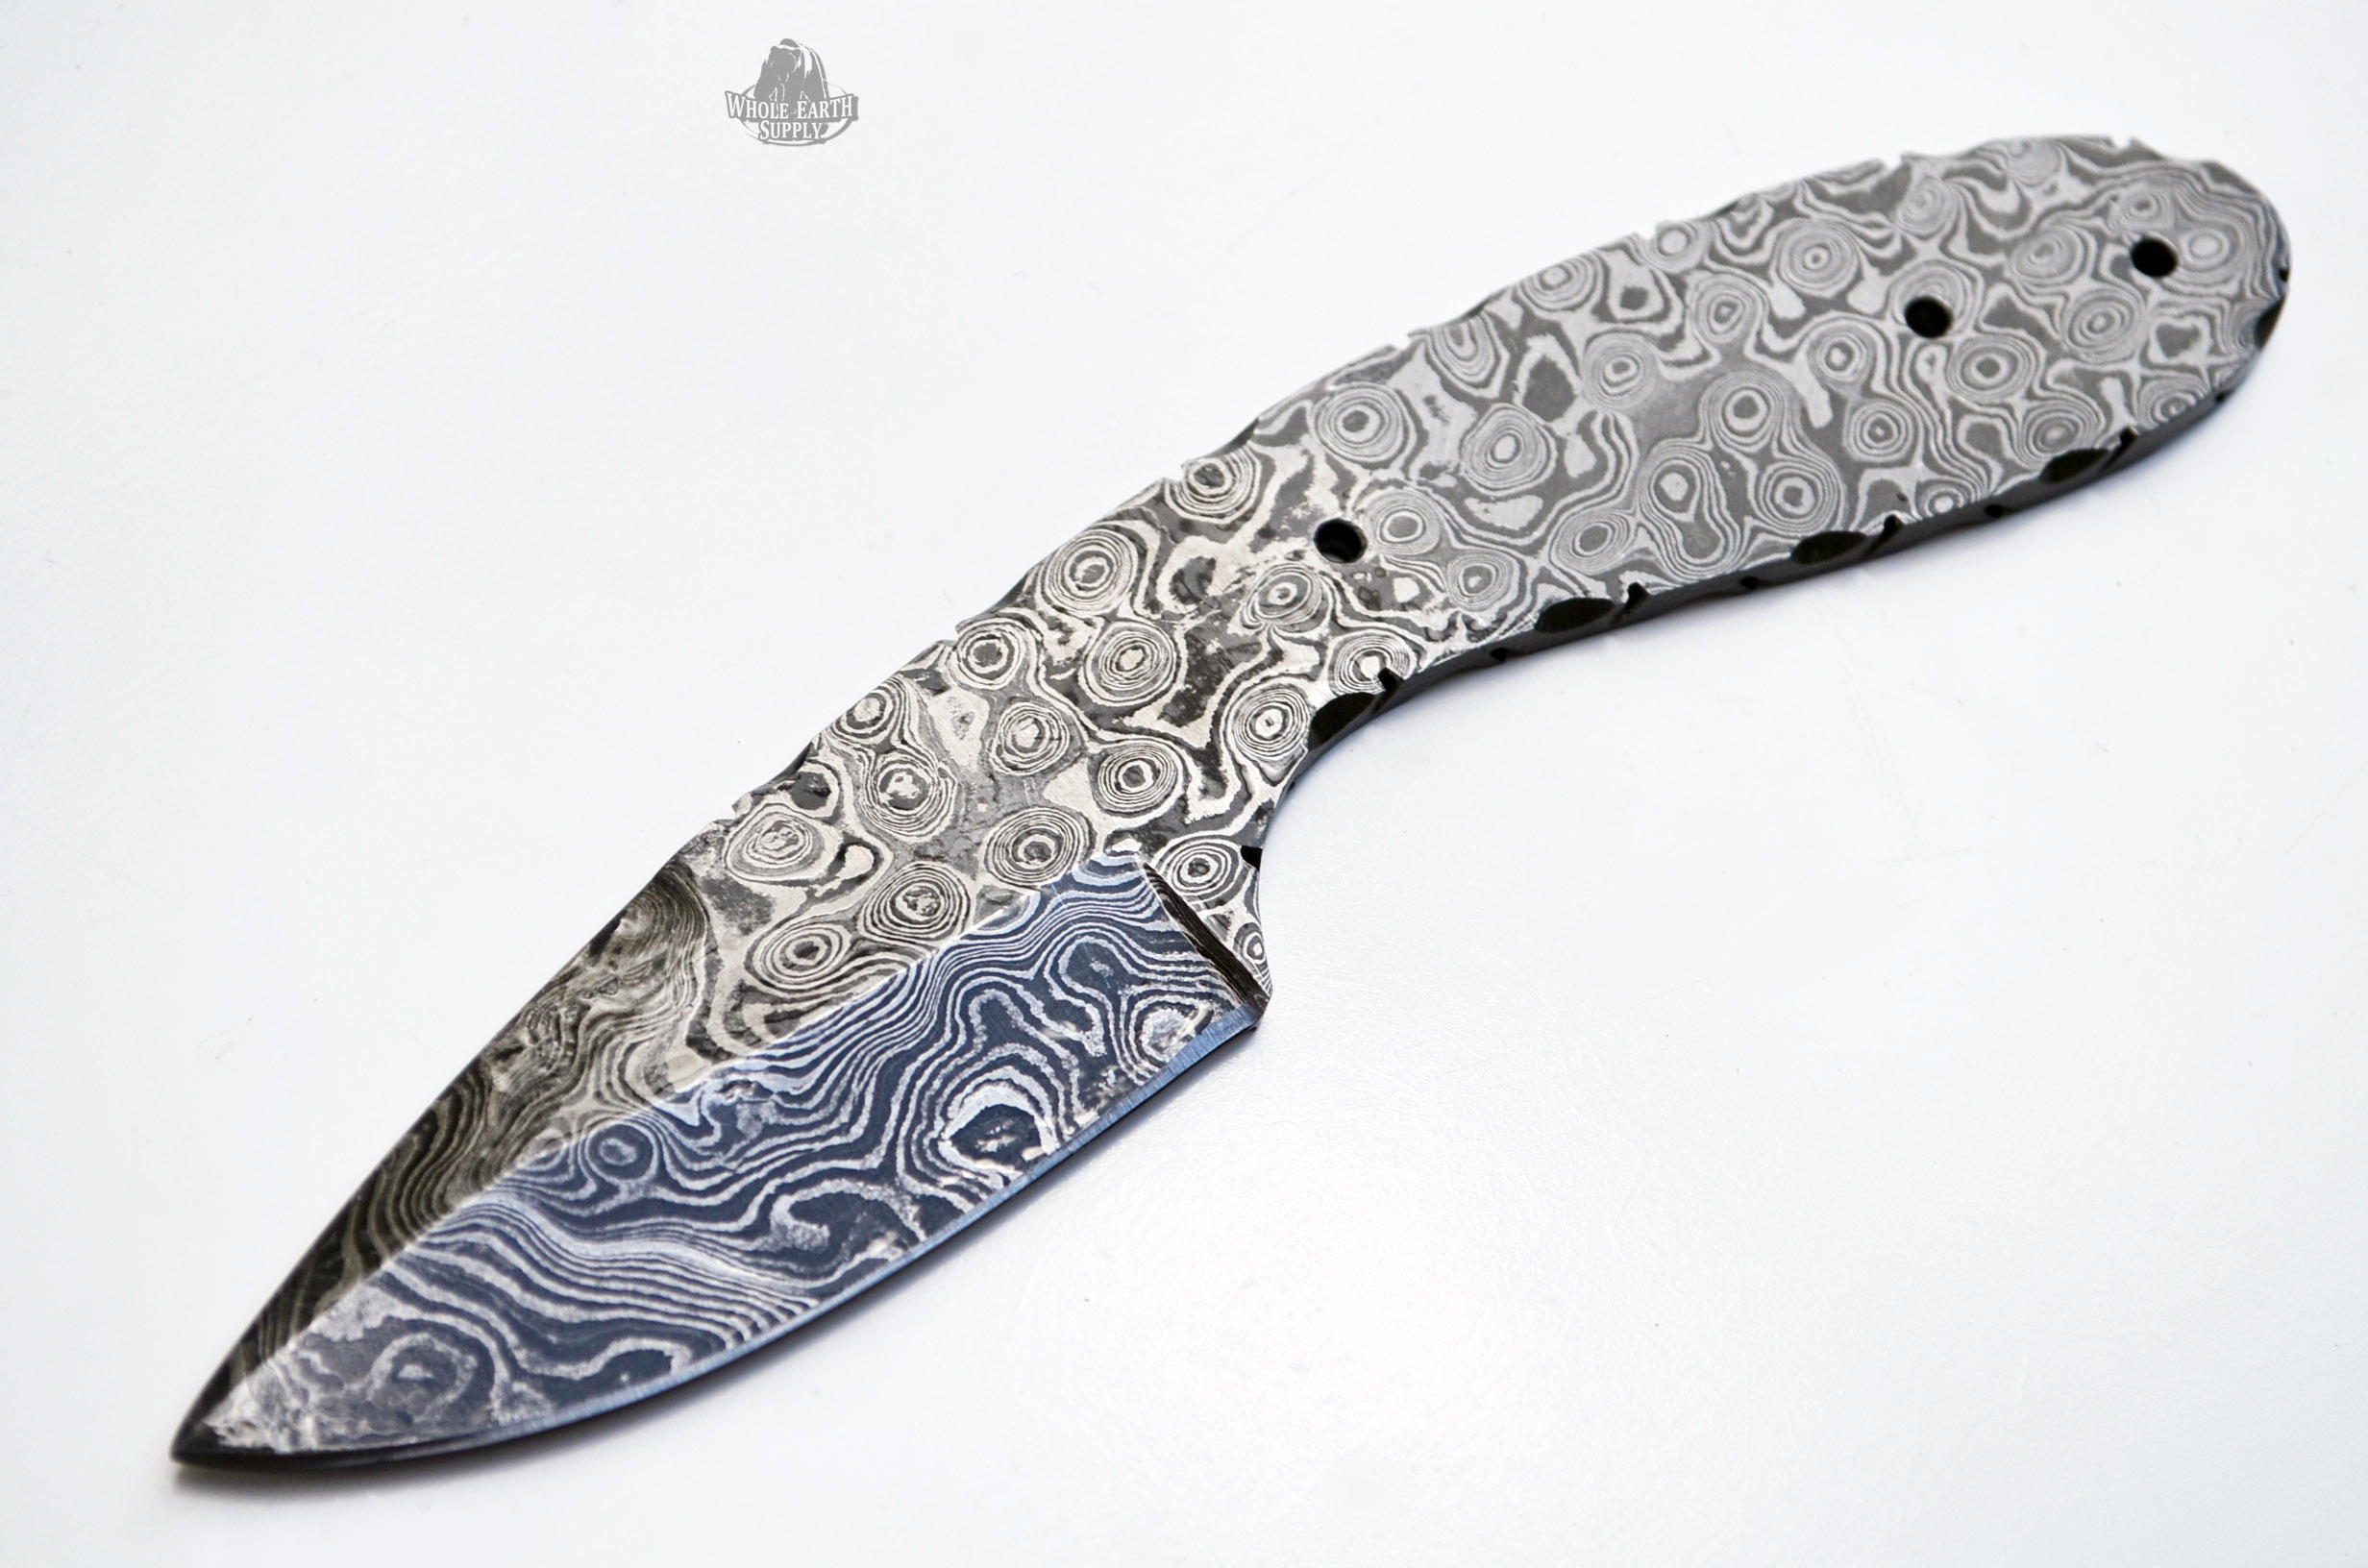 Damascus Steel Blades / KNIFE BLADES / custom knife blades, Muzzleloader  Supplies, Reenactment